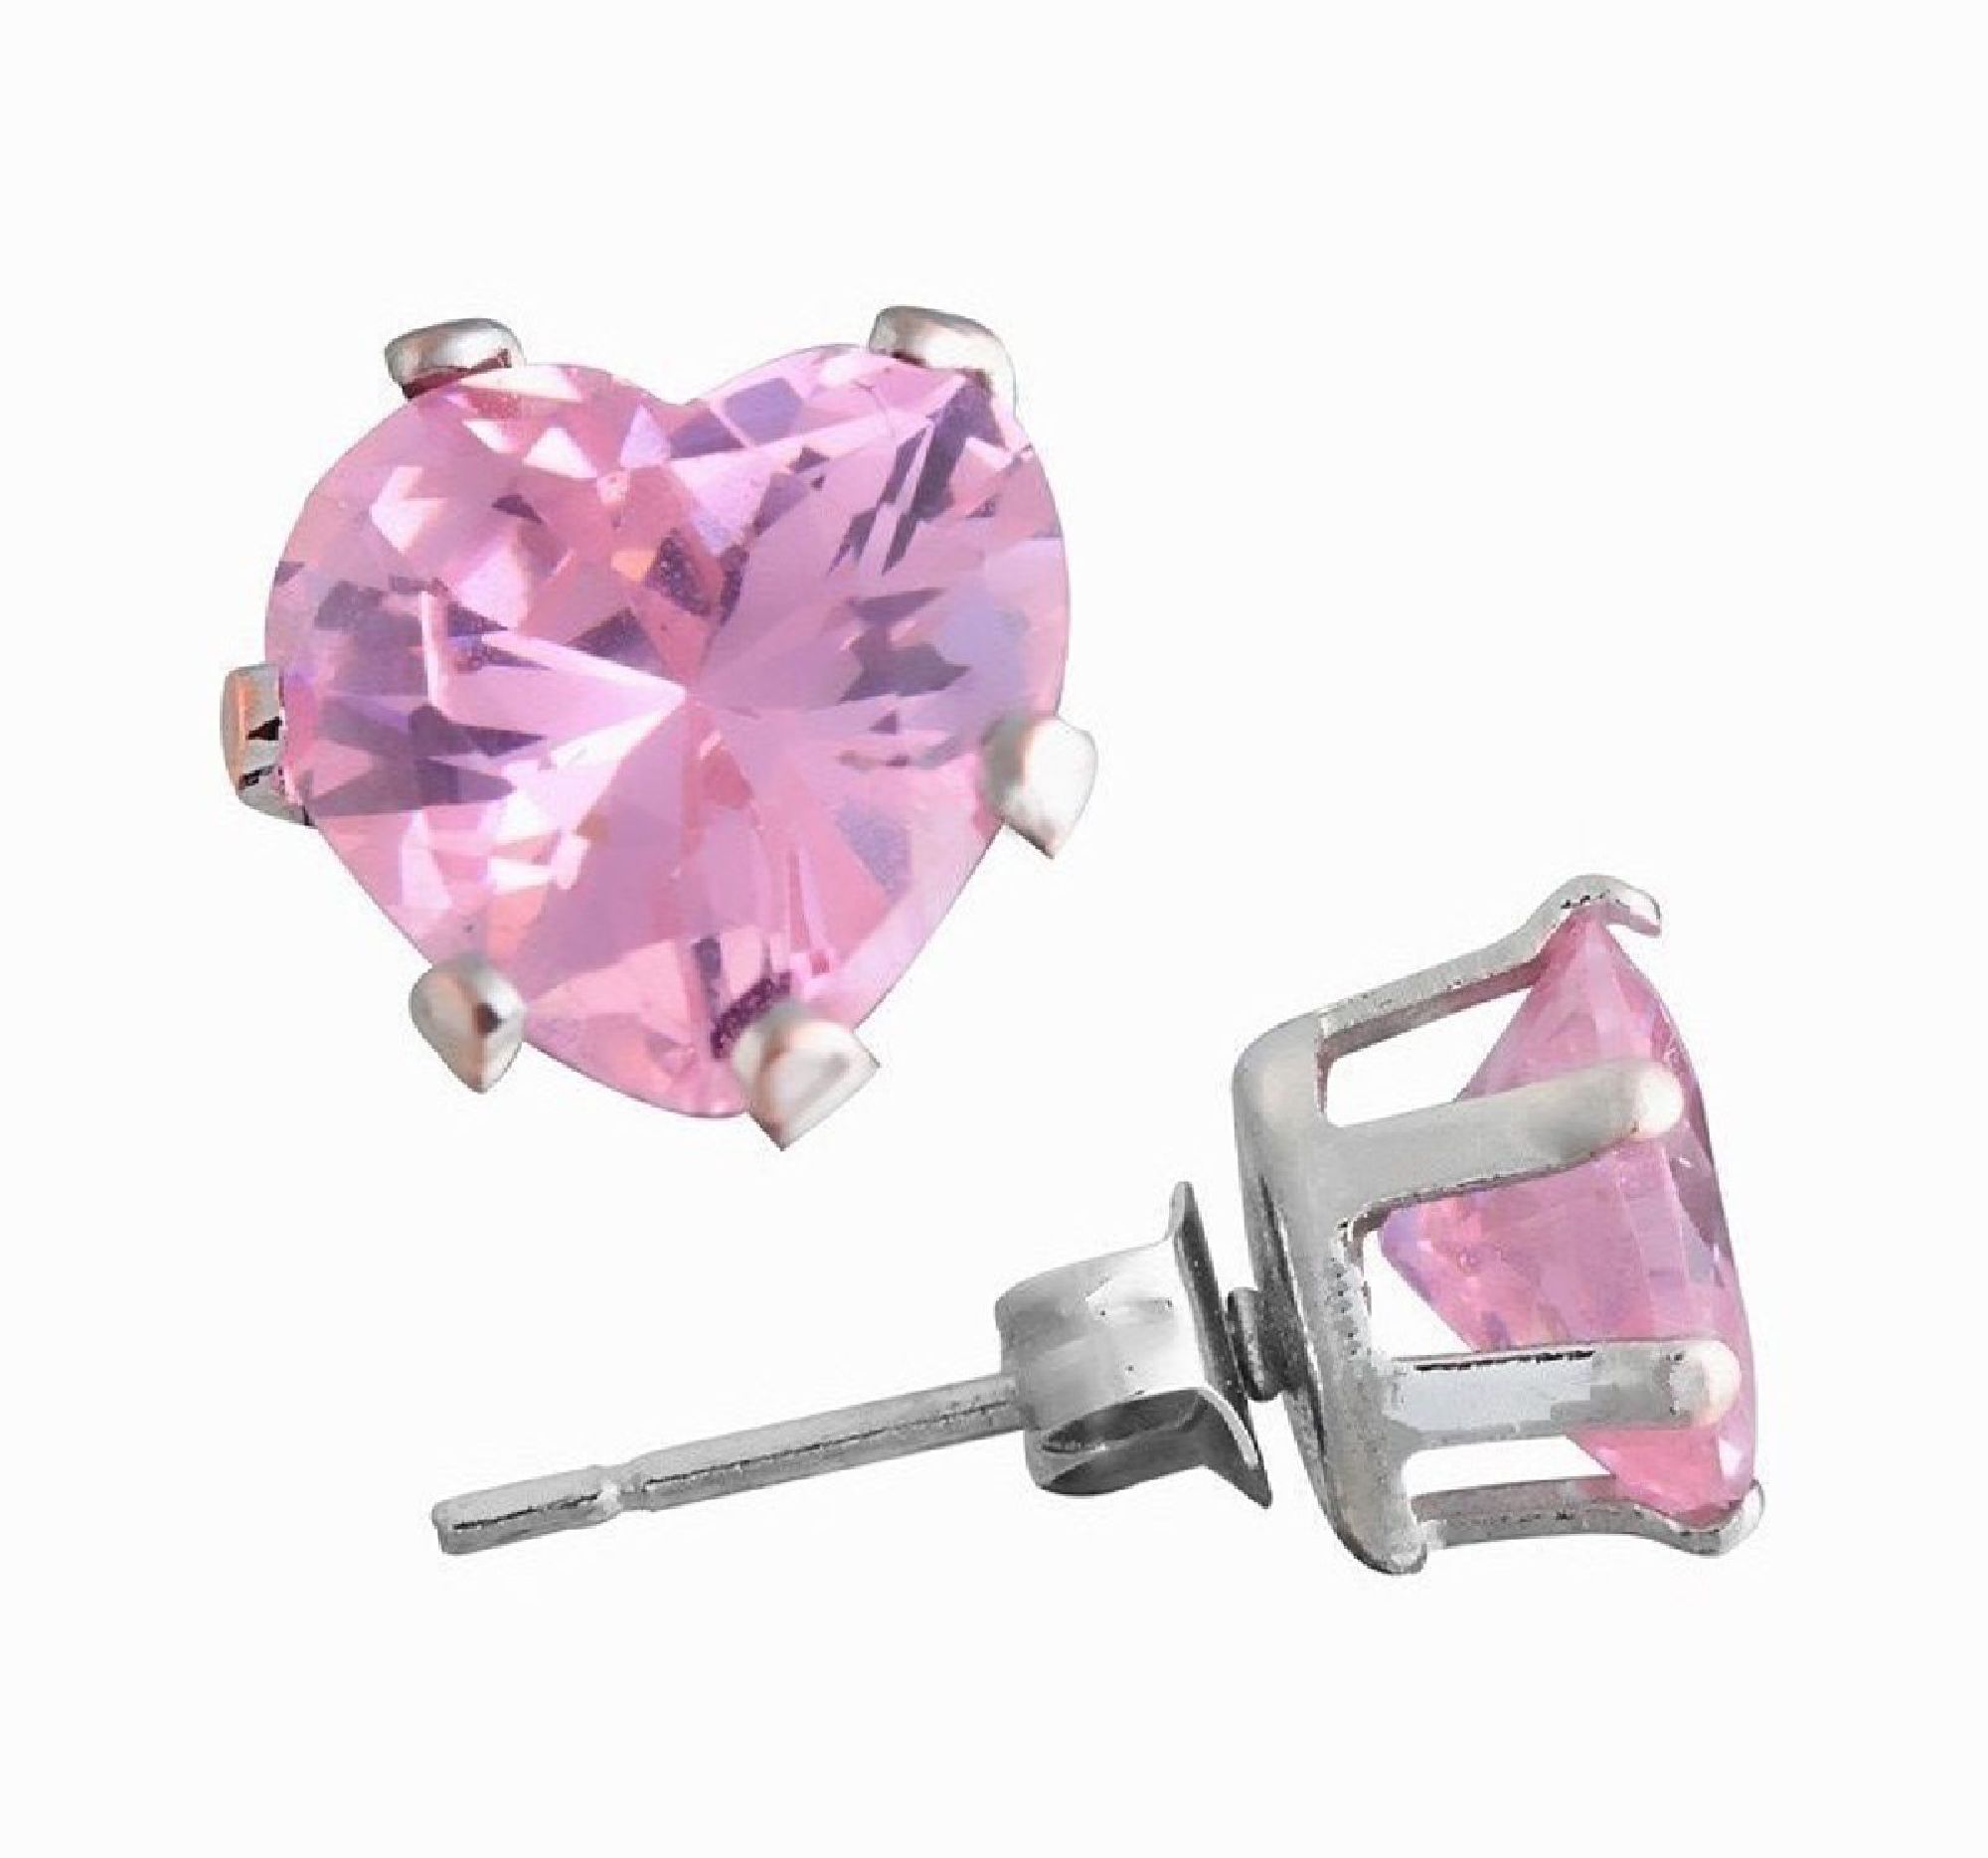 5 Carat Heart Shape Pink Diamond manmade Stud Earrings in Sterling Silver Designed in France